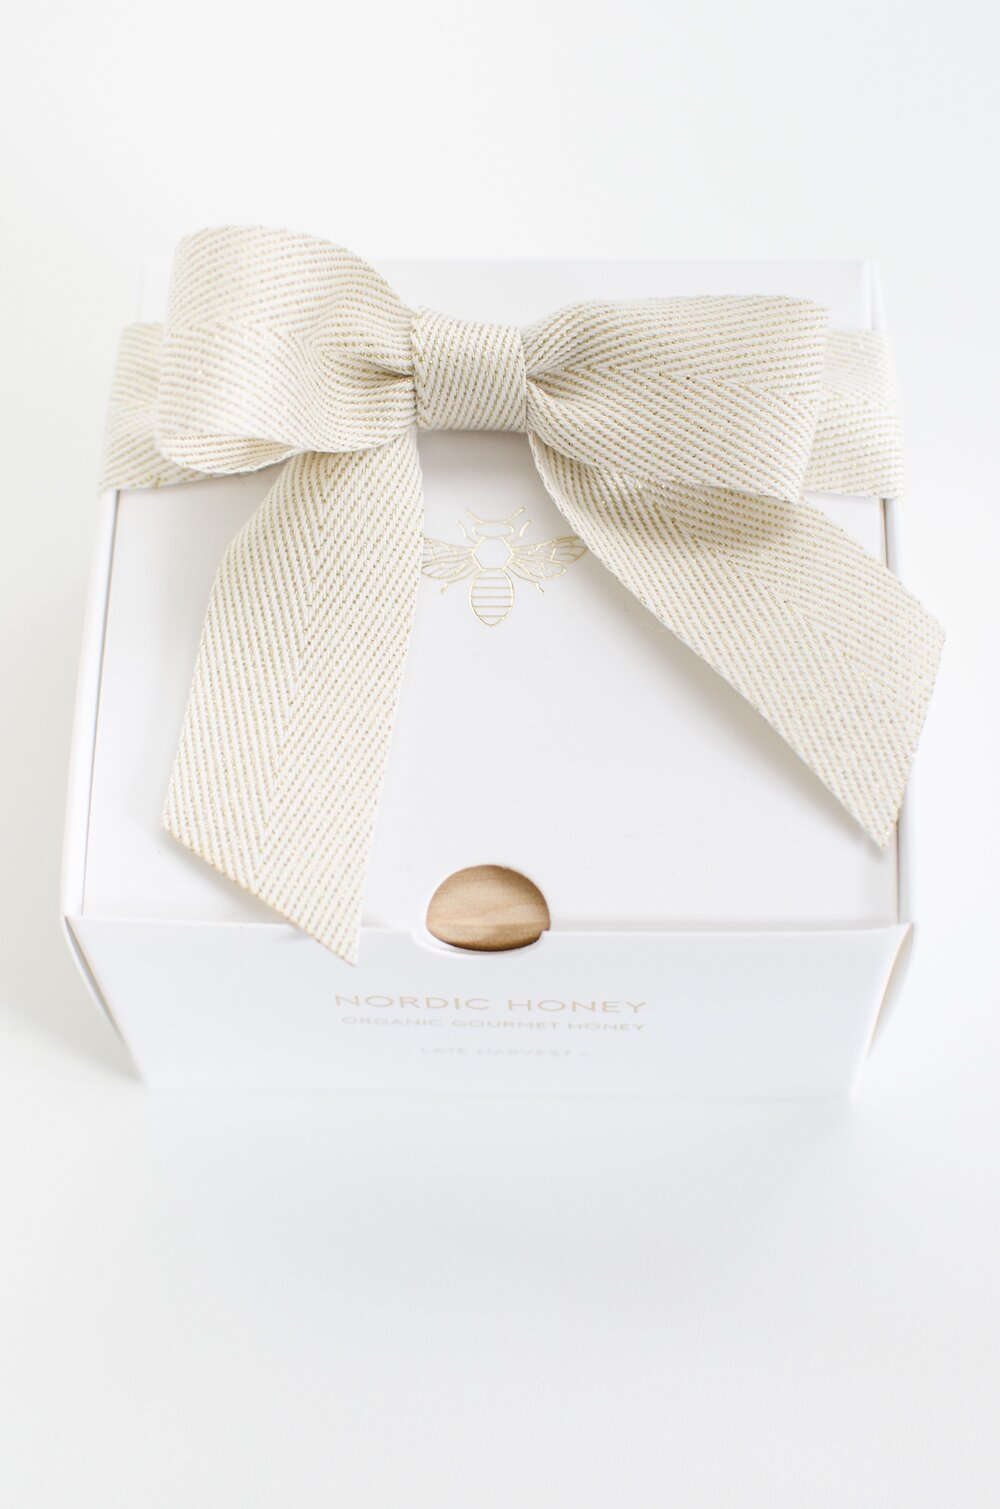 Nordic Honey_Corporate Gifting_250g box with ribbon_1.jpg